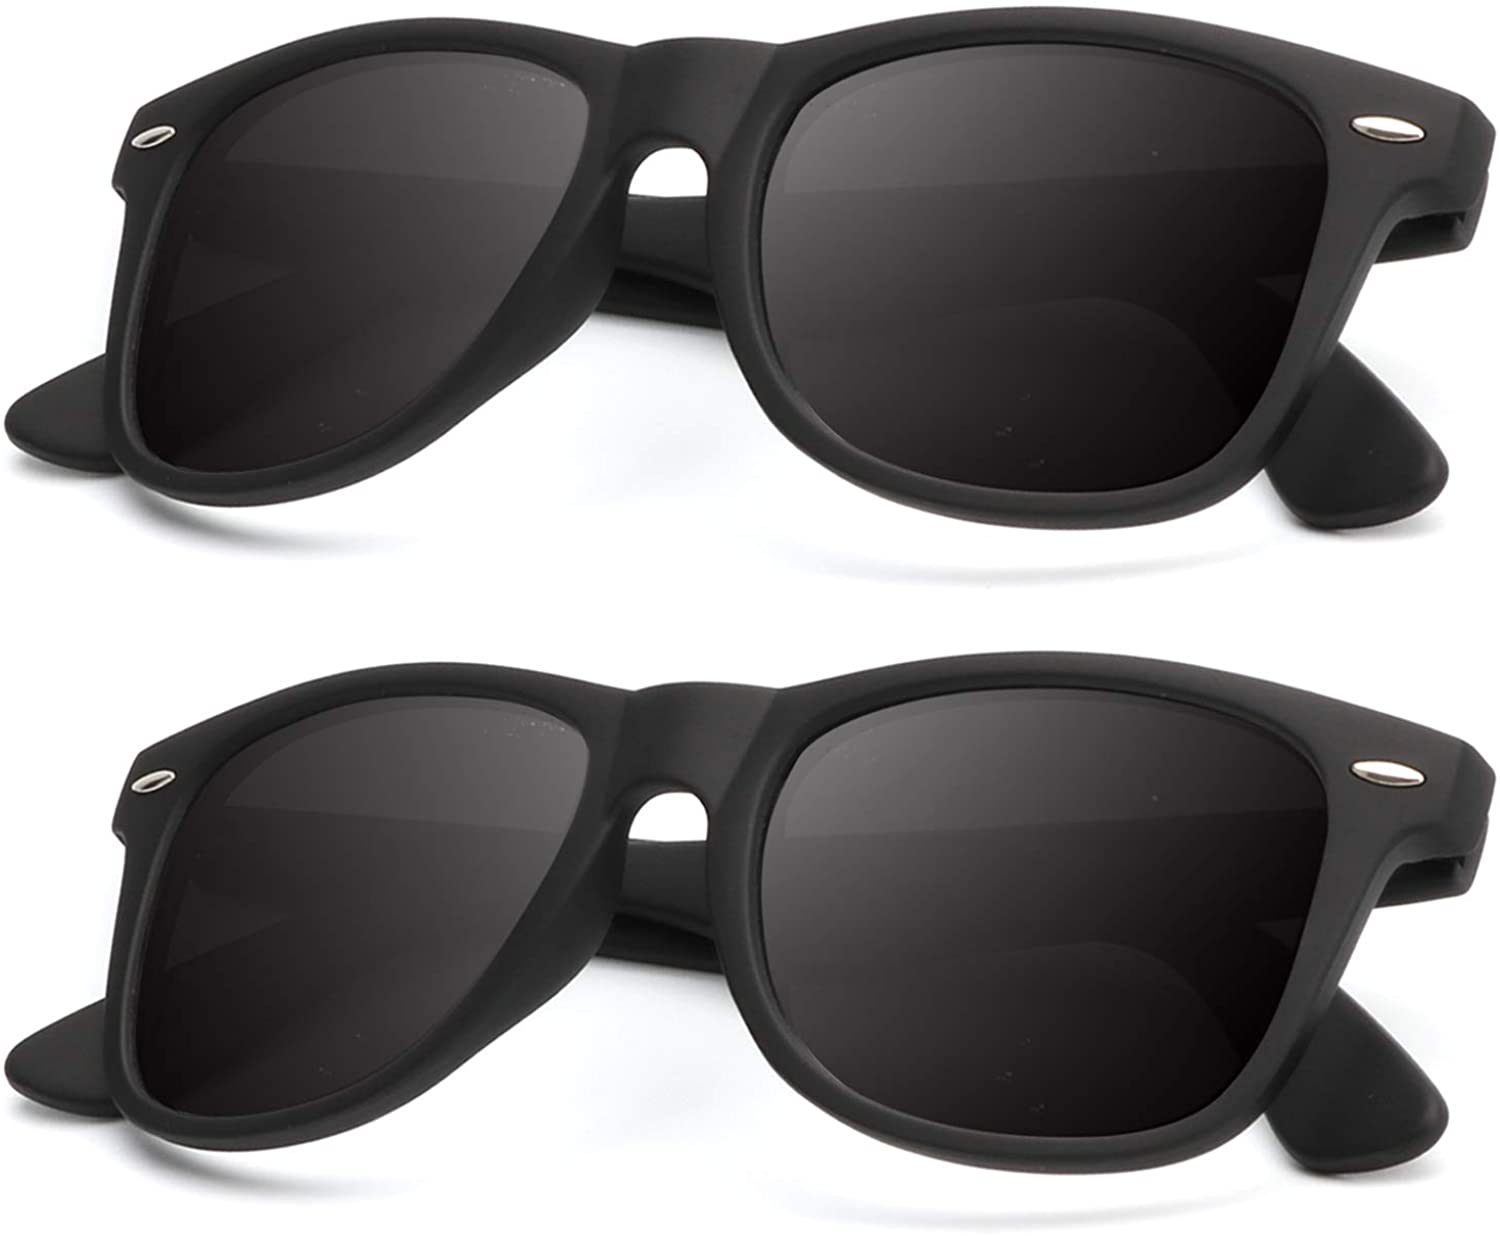  KALIYADI Polarized Sunglasses Men, Lightweight Mens Sunglasses  Polarized UV Protection Driving Fishing Golf (Black Clear/Black Blue/Black  Red) : Sports & Outdoors